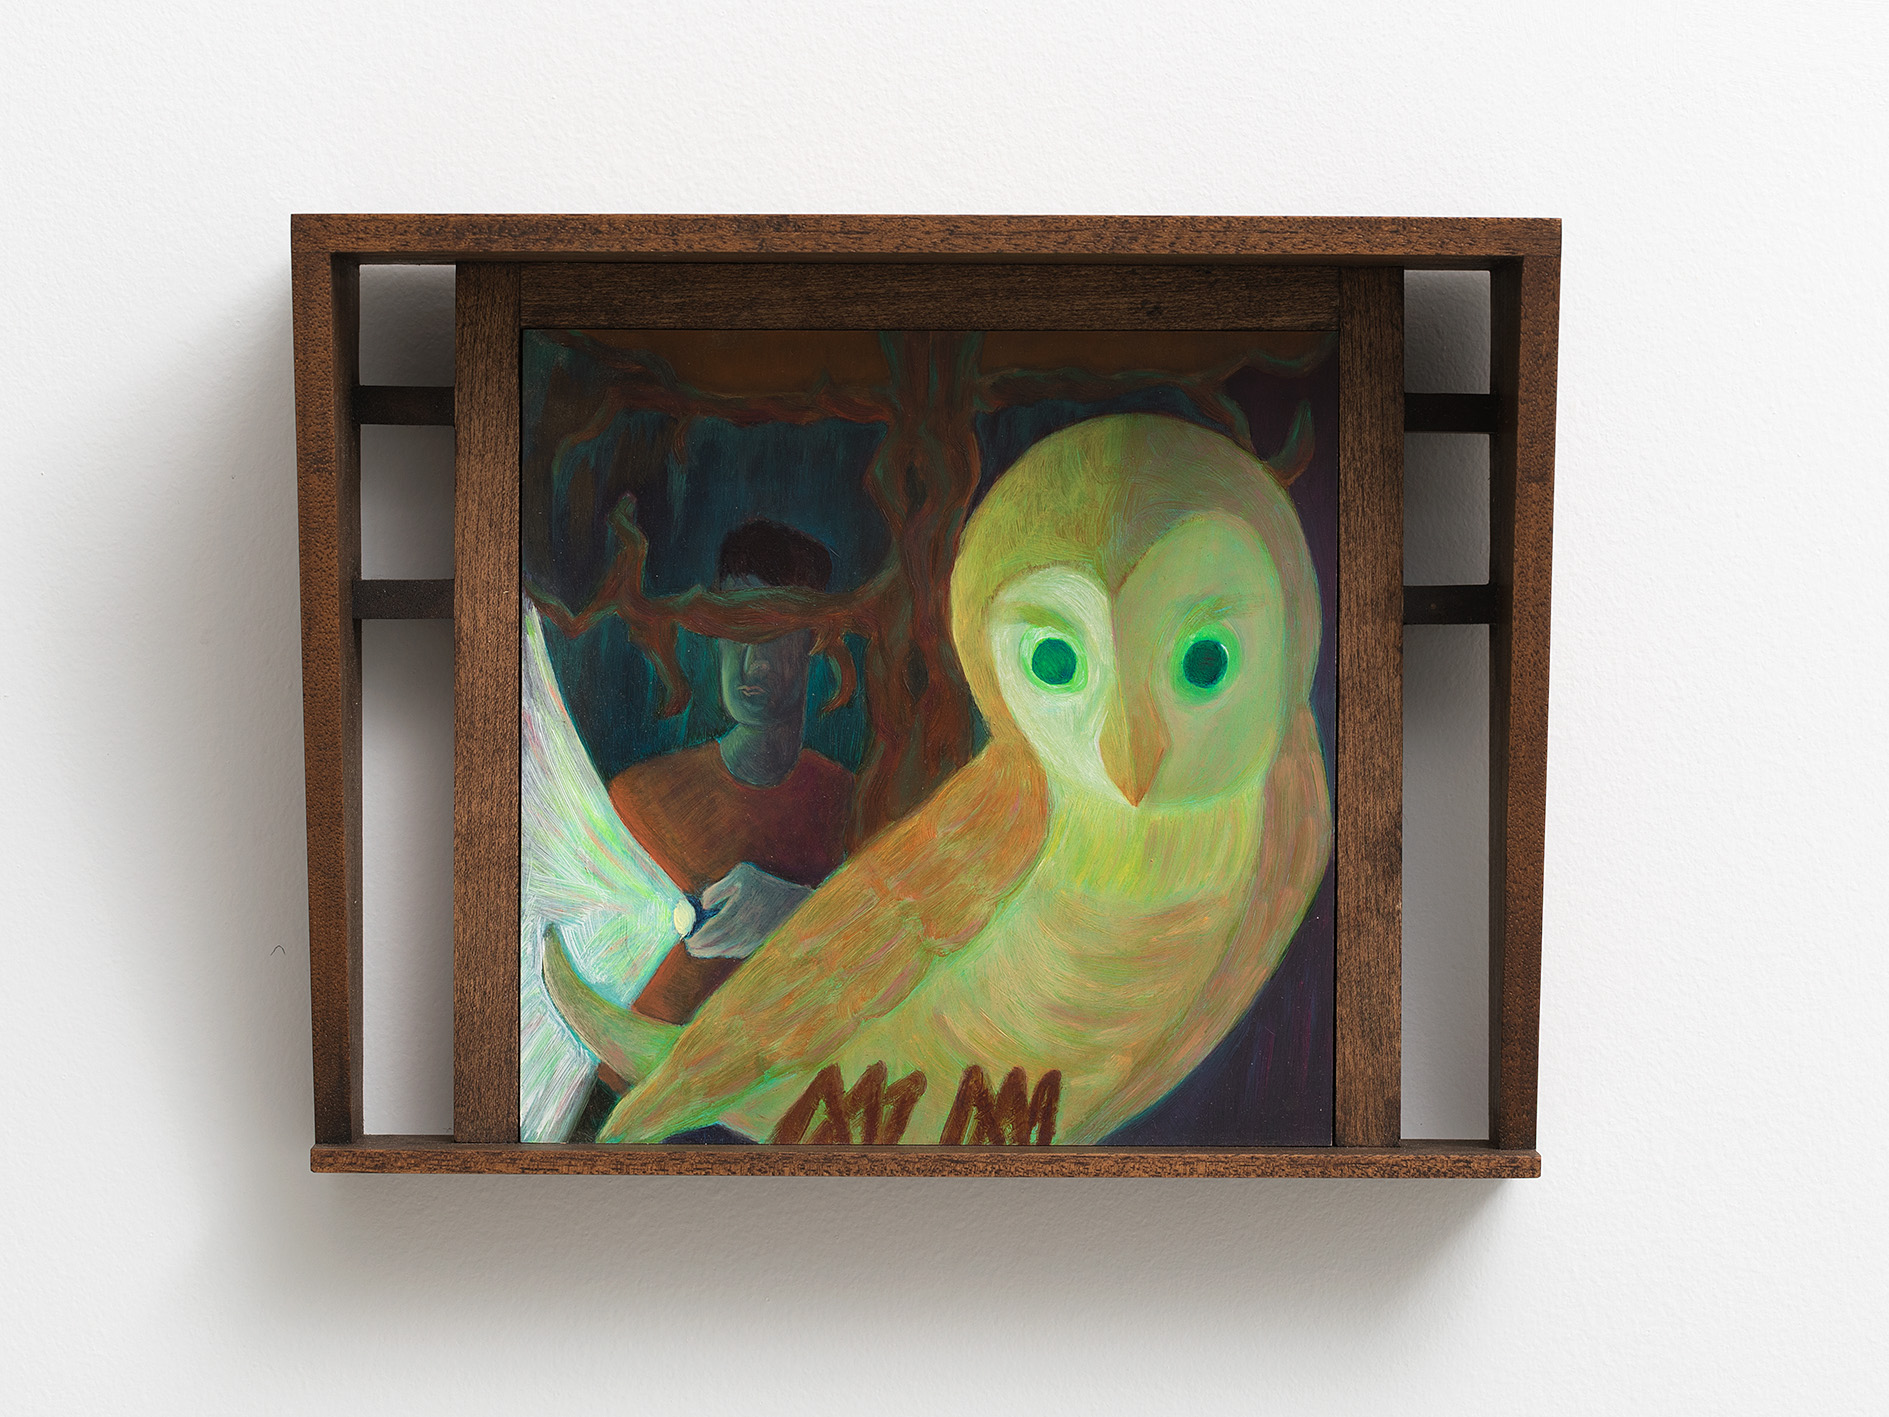 Owl
Oil on panel
2020
20.3X20.3 cm, 8X8 in